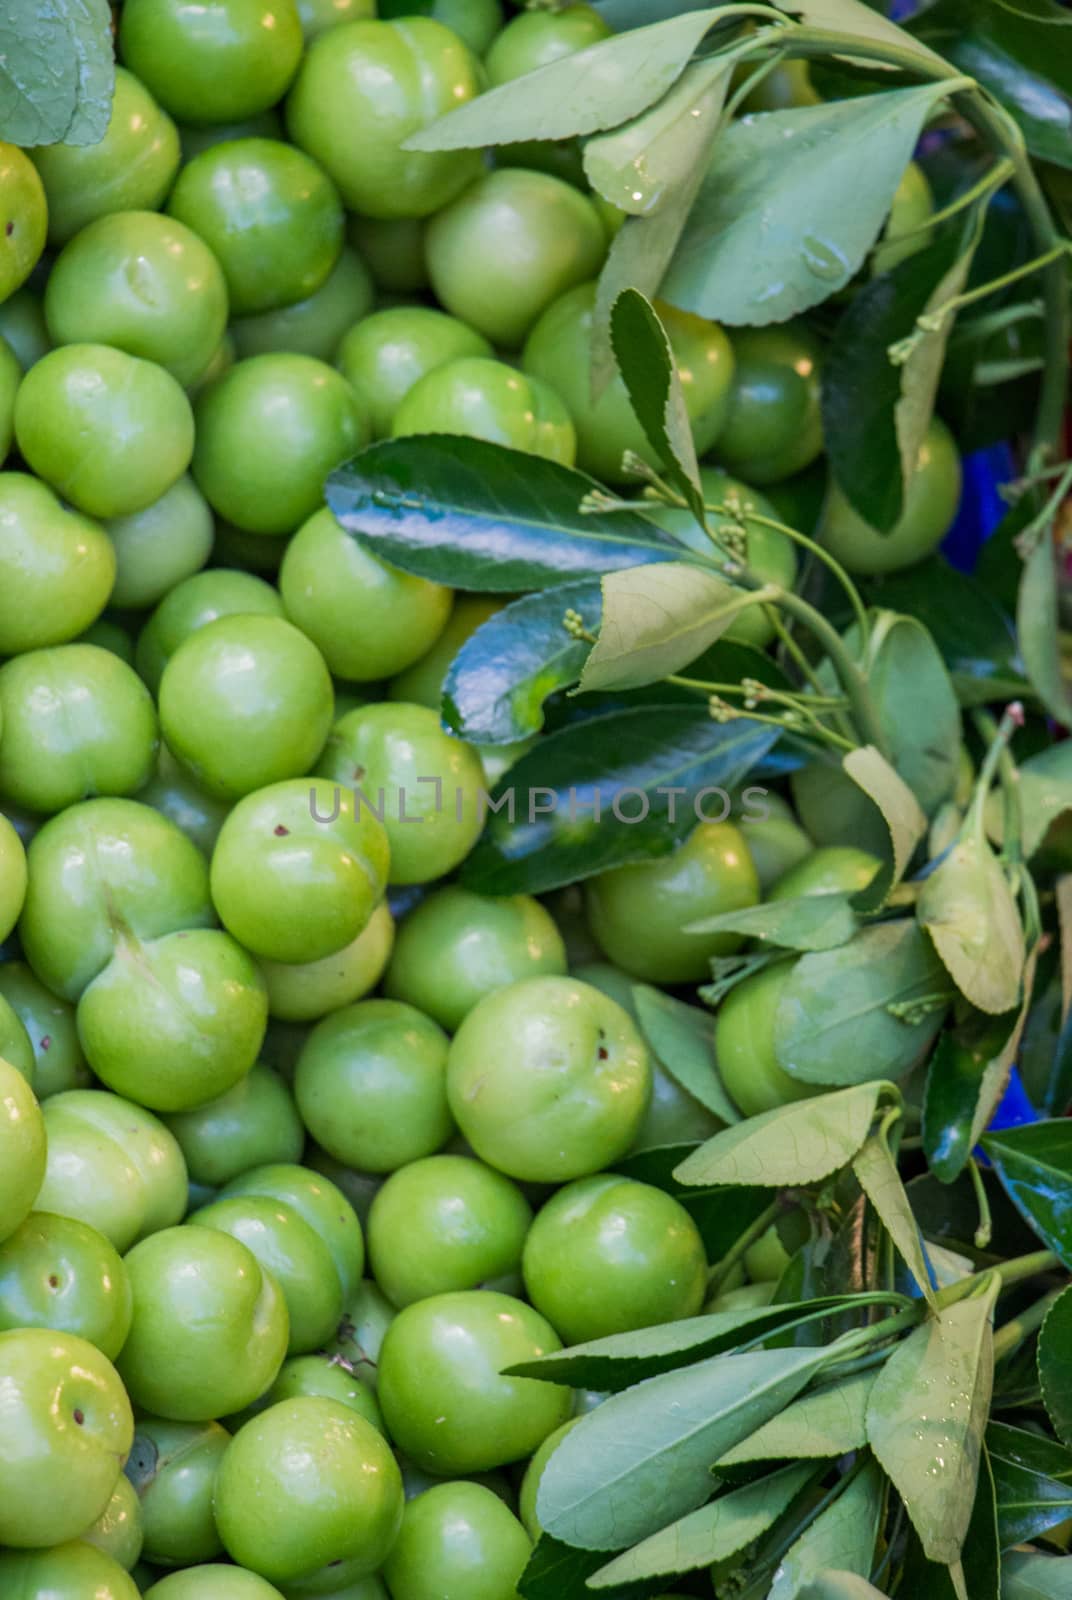 Green unripe plums in bazaar market place